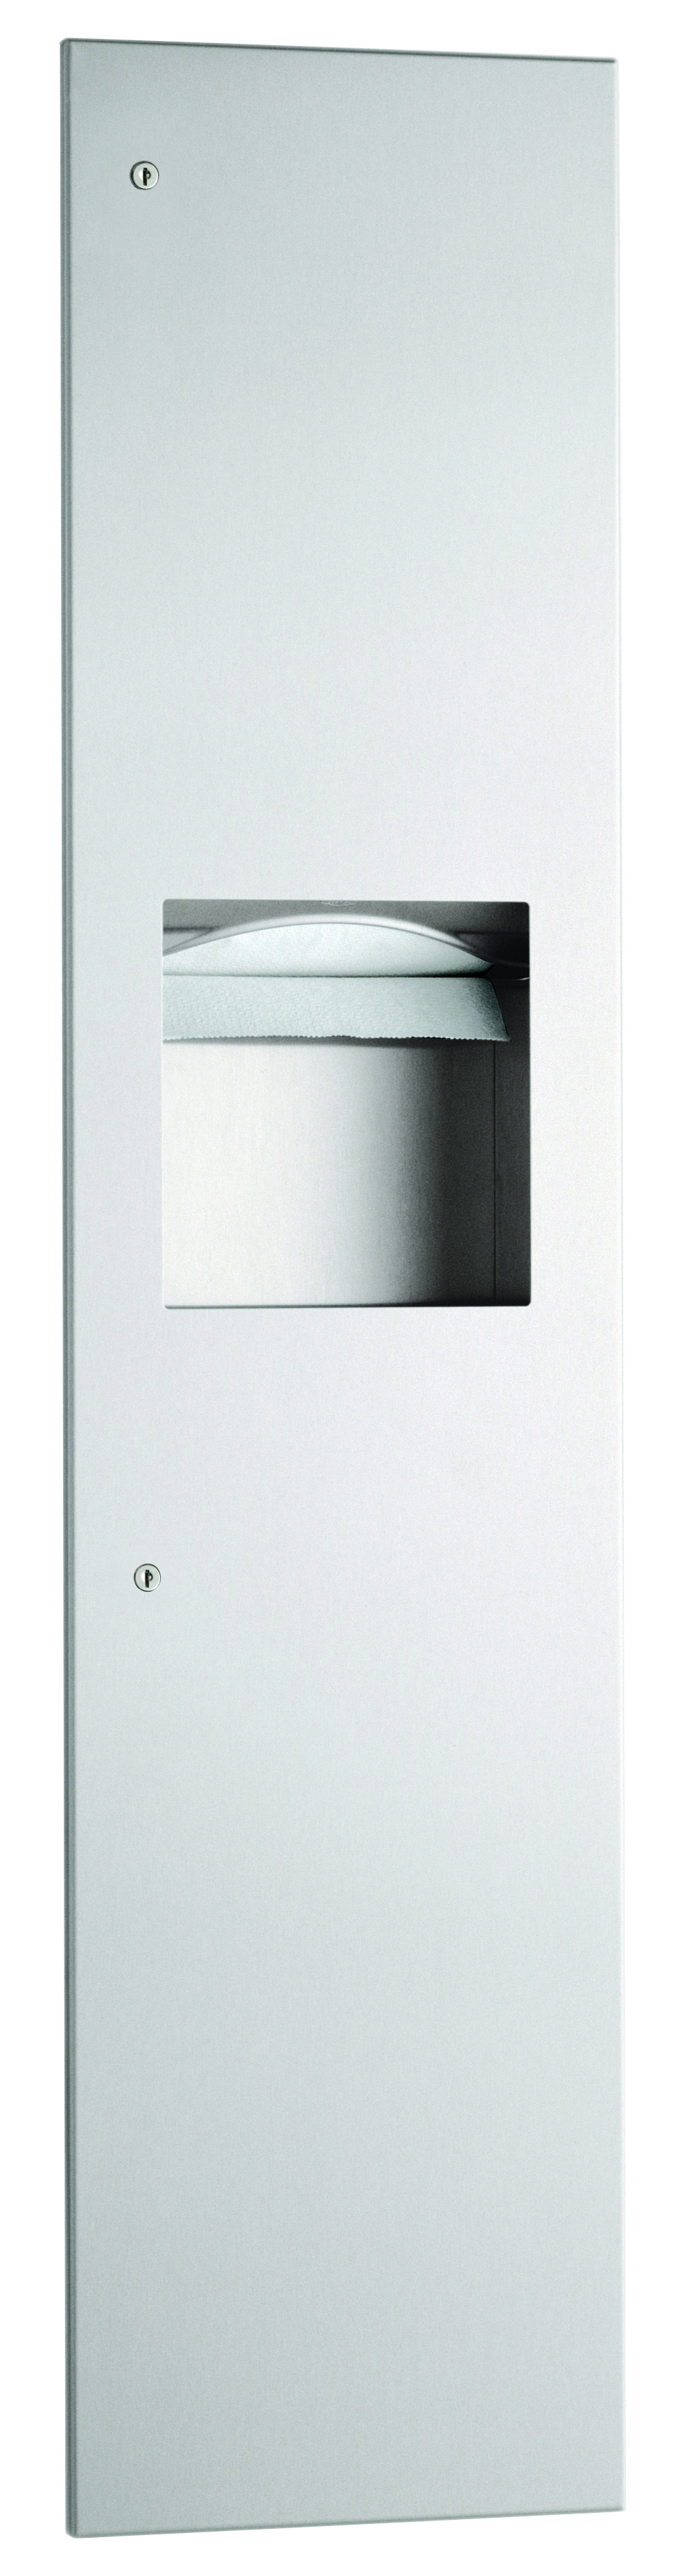 Recessed Paper Towel Dispenser/Waste Bin Image